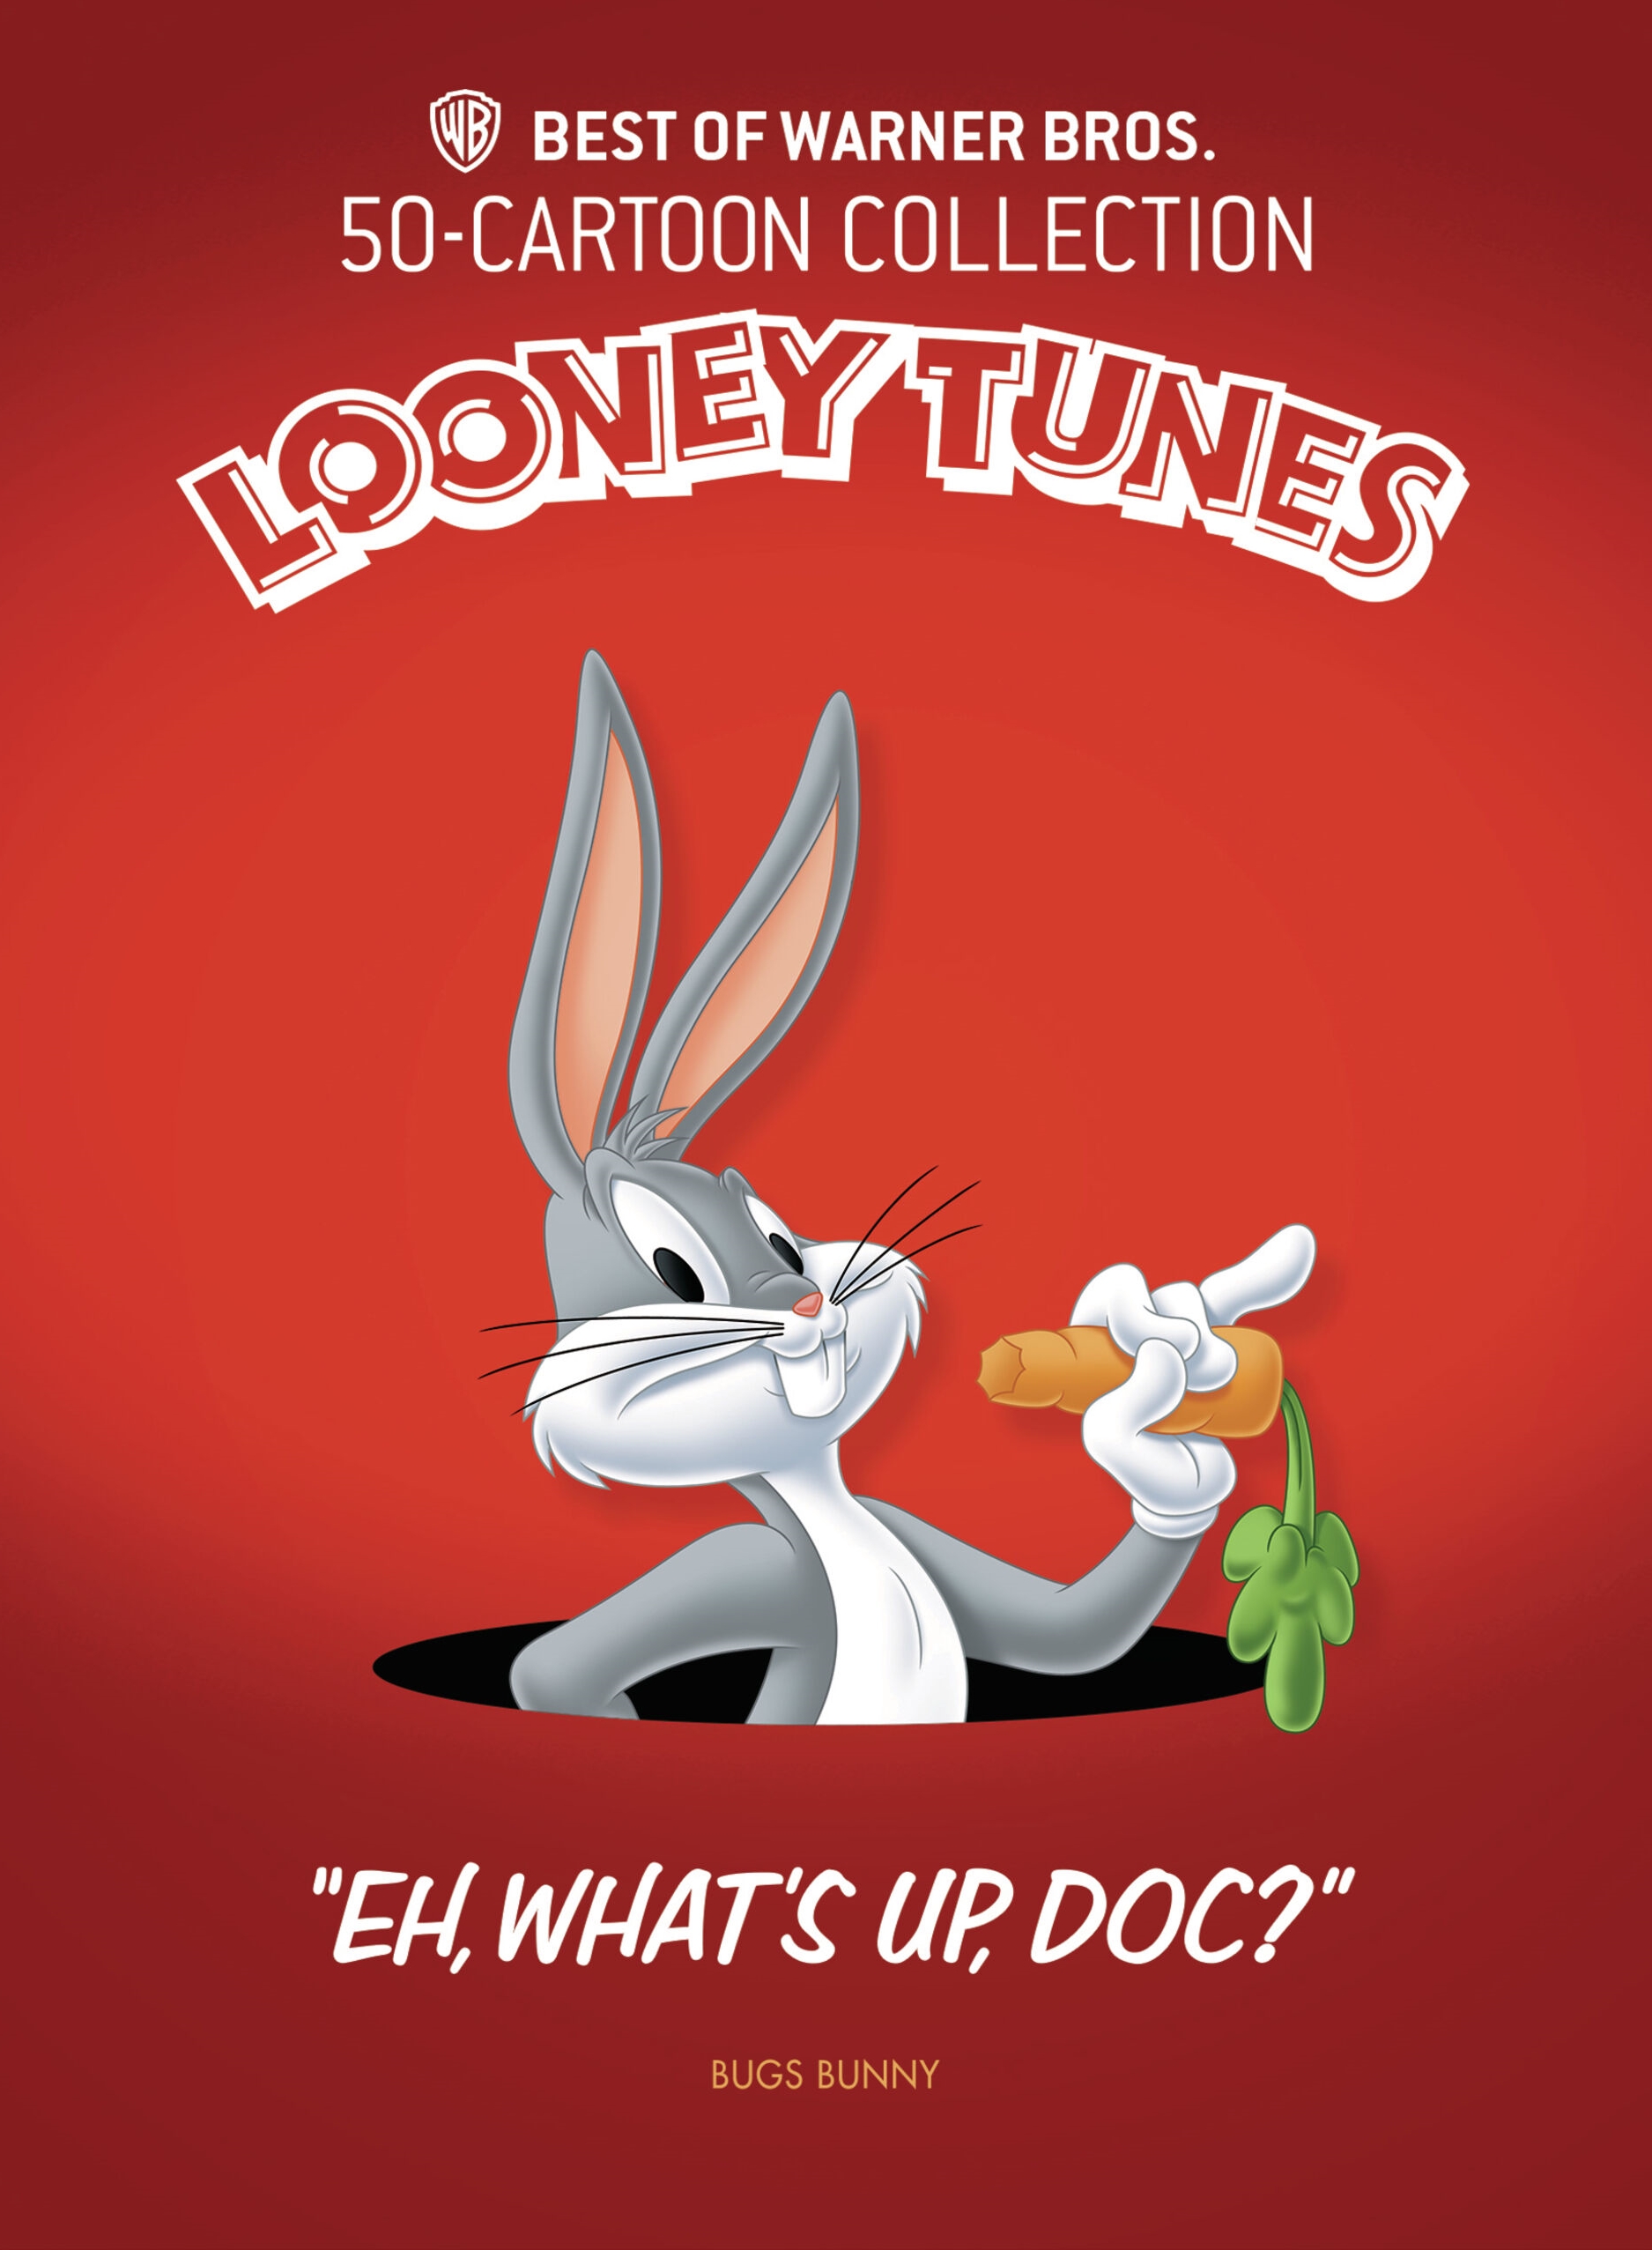 The Best of Warner Bros. 50 Cartoon Collection Looney Tunes [DVD